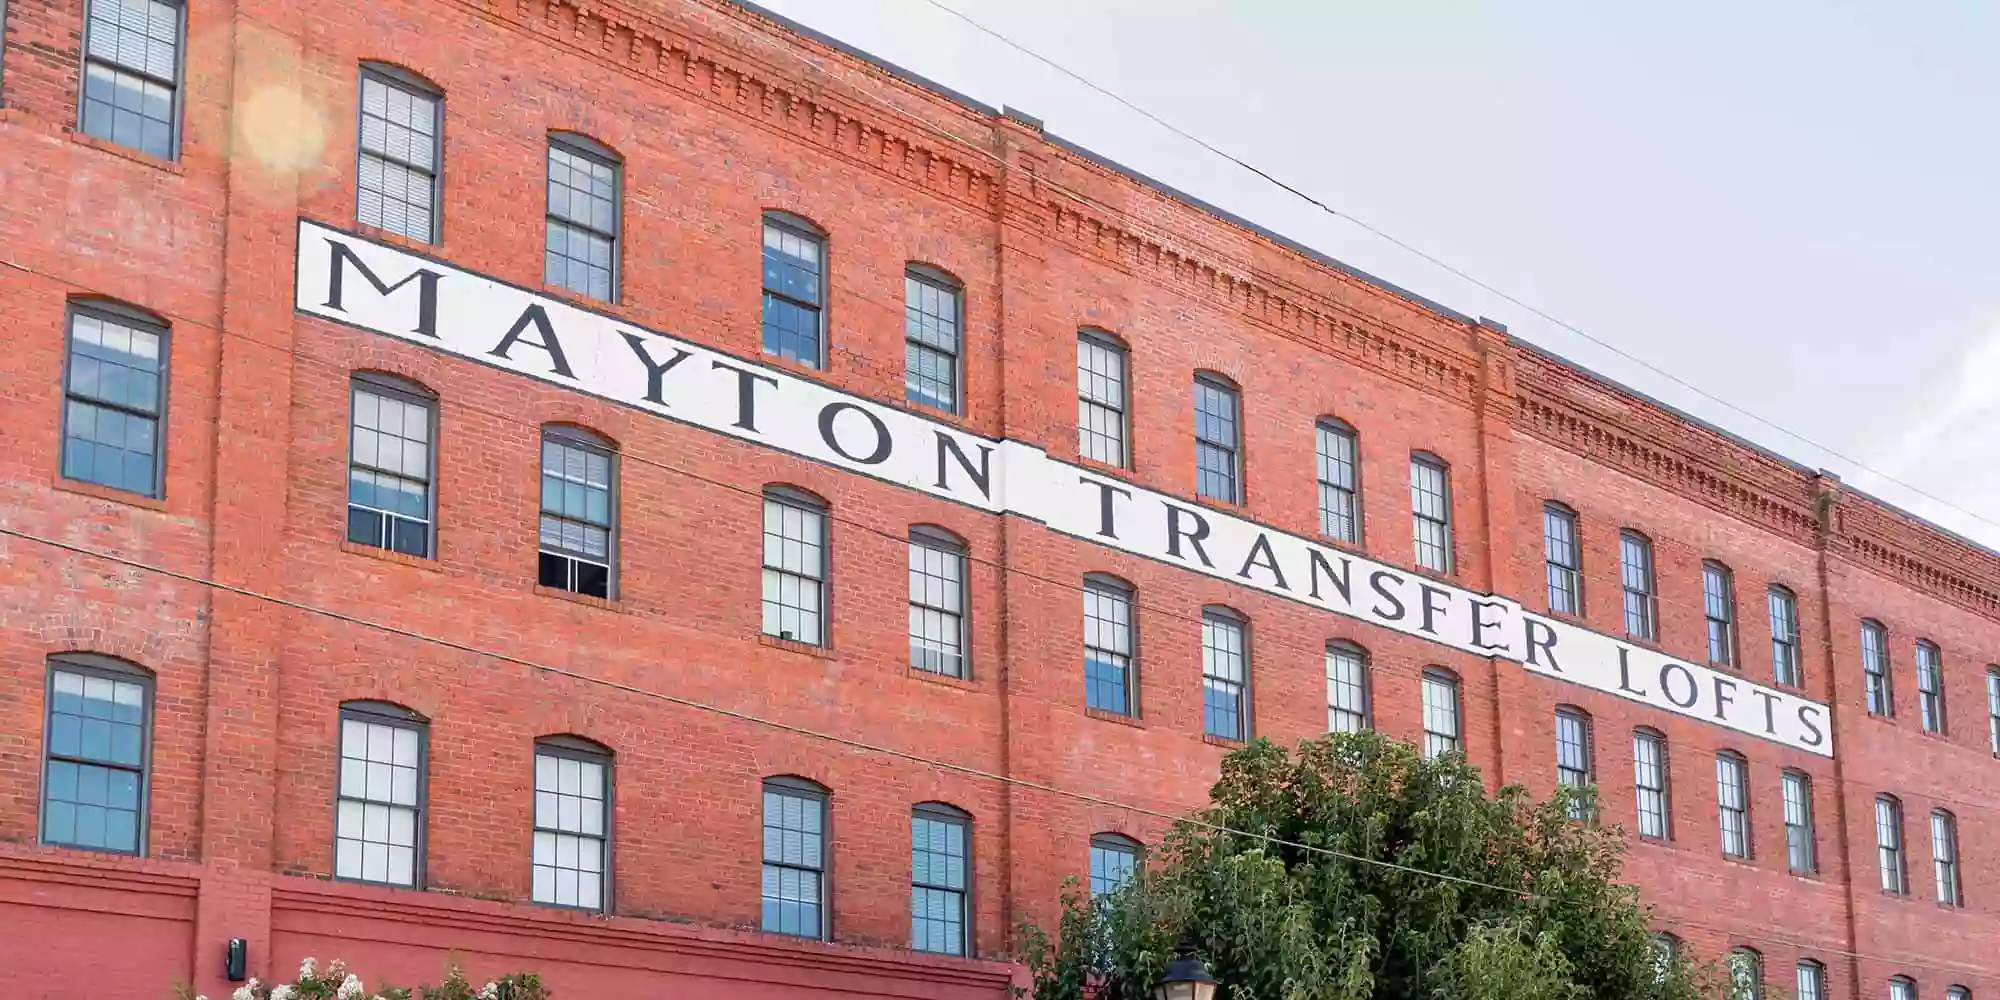 Mayton Transfer Lofts